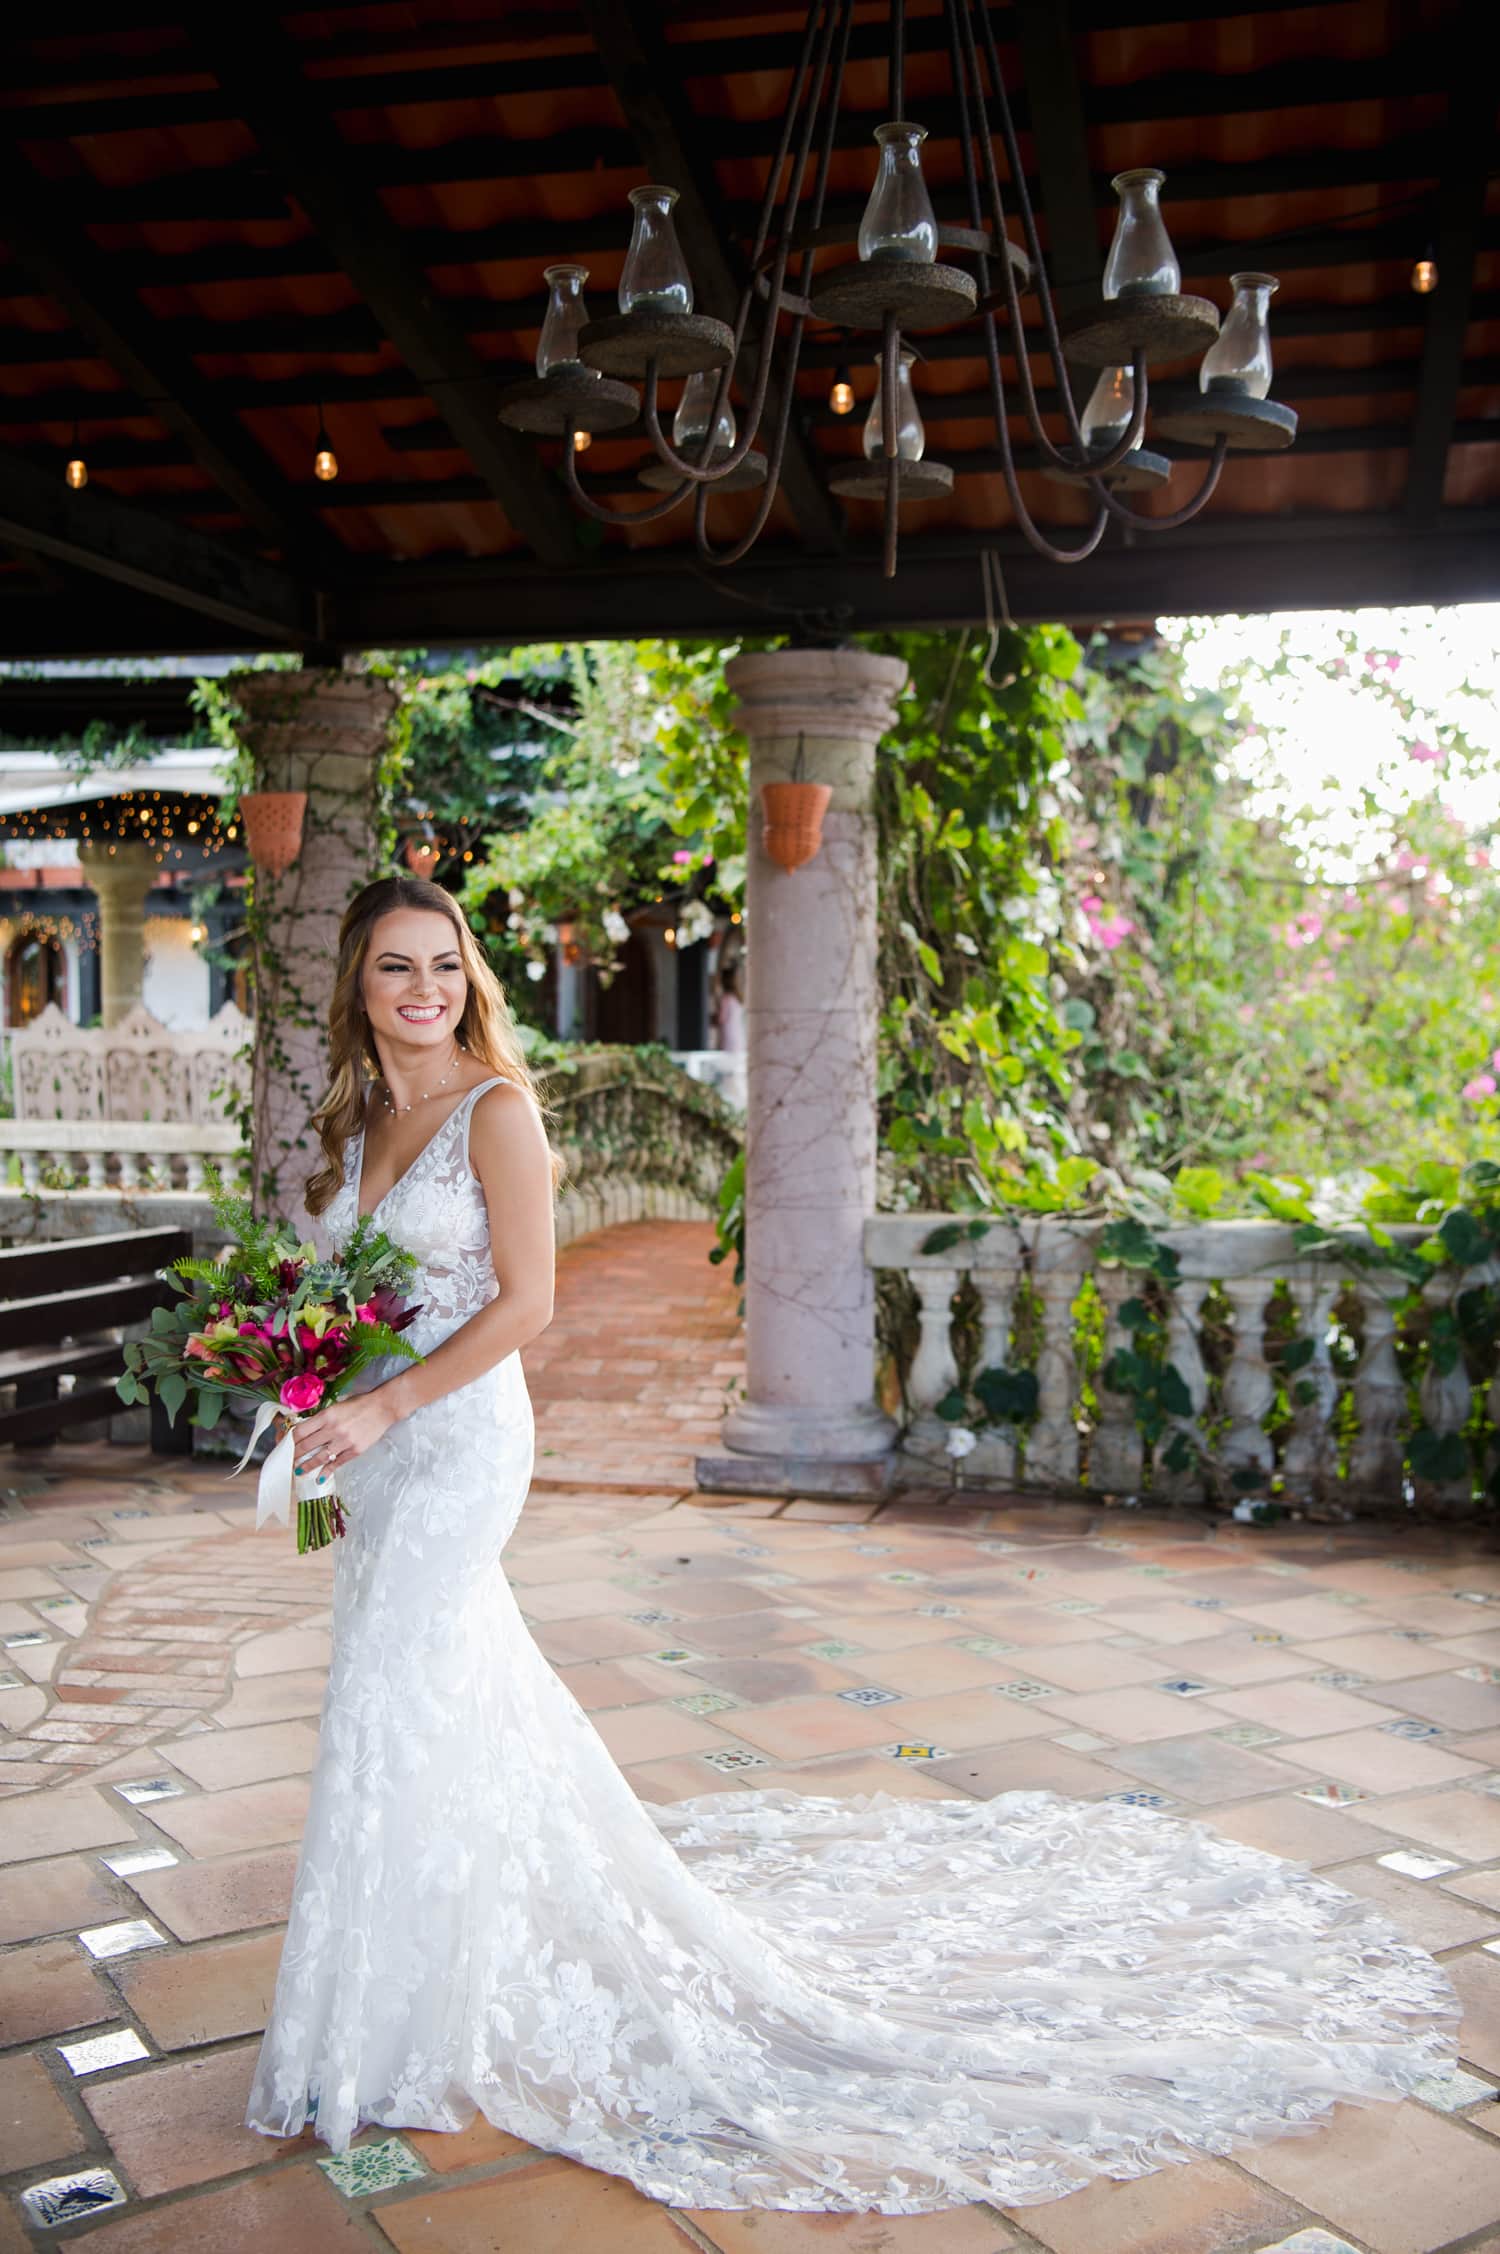 destination wedding photographer Camille Fontanez captures a beautiful outdoor wedding at Hacienda Siesta Alegre in Puerto Rico, Caribbean